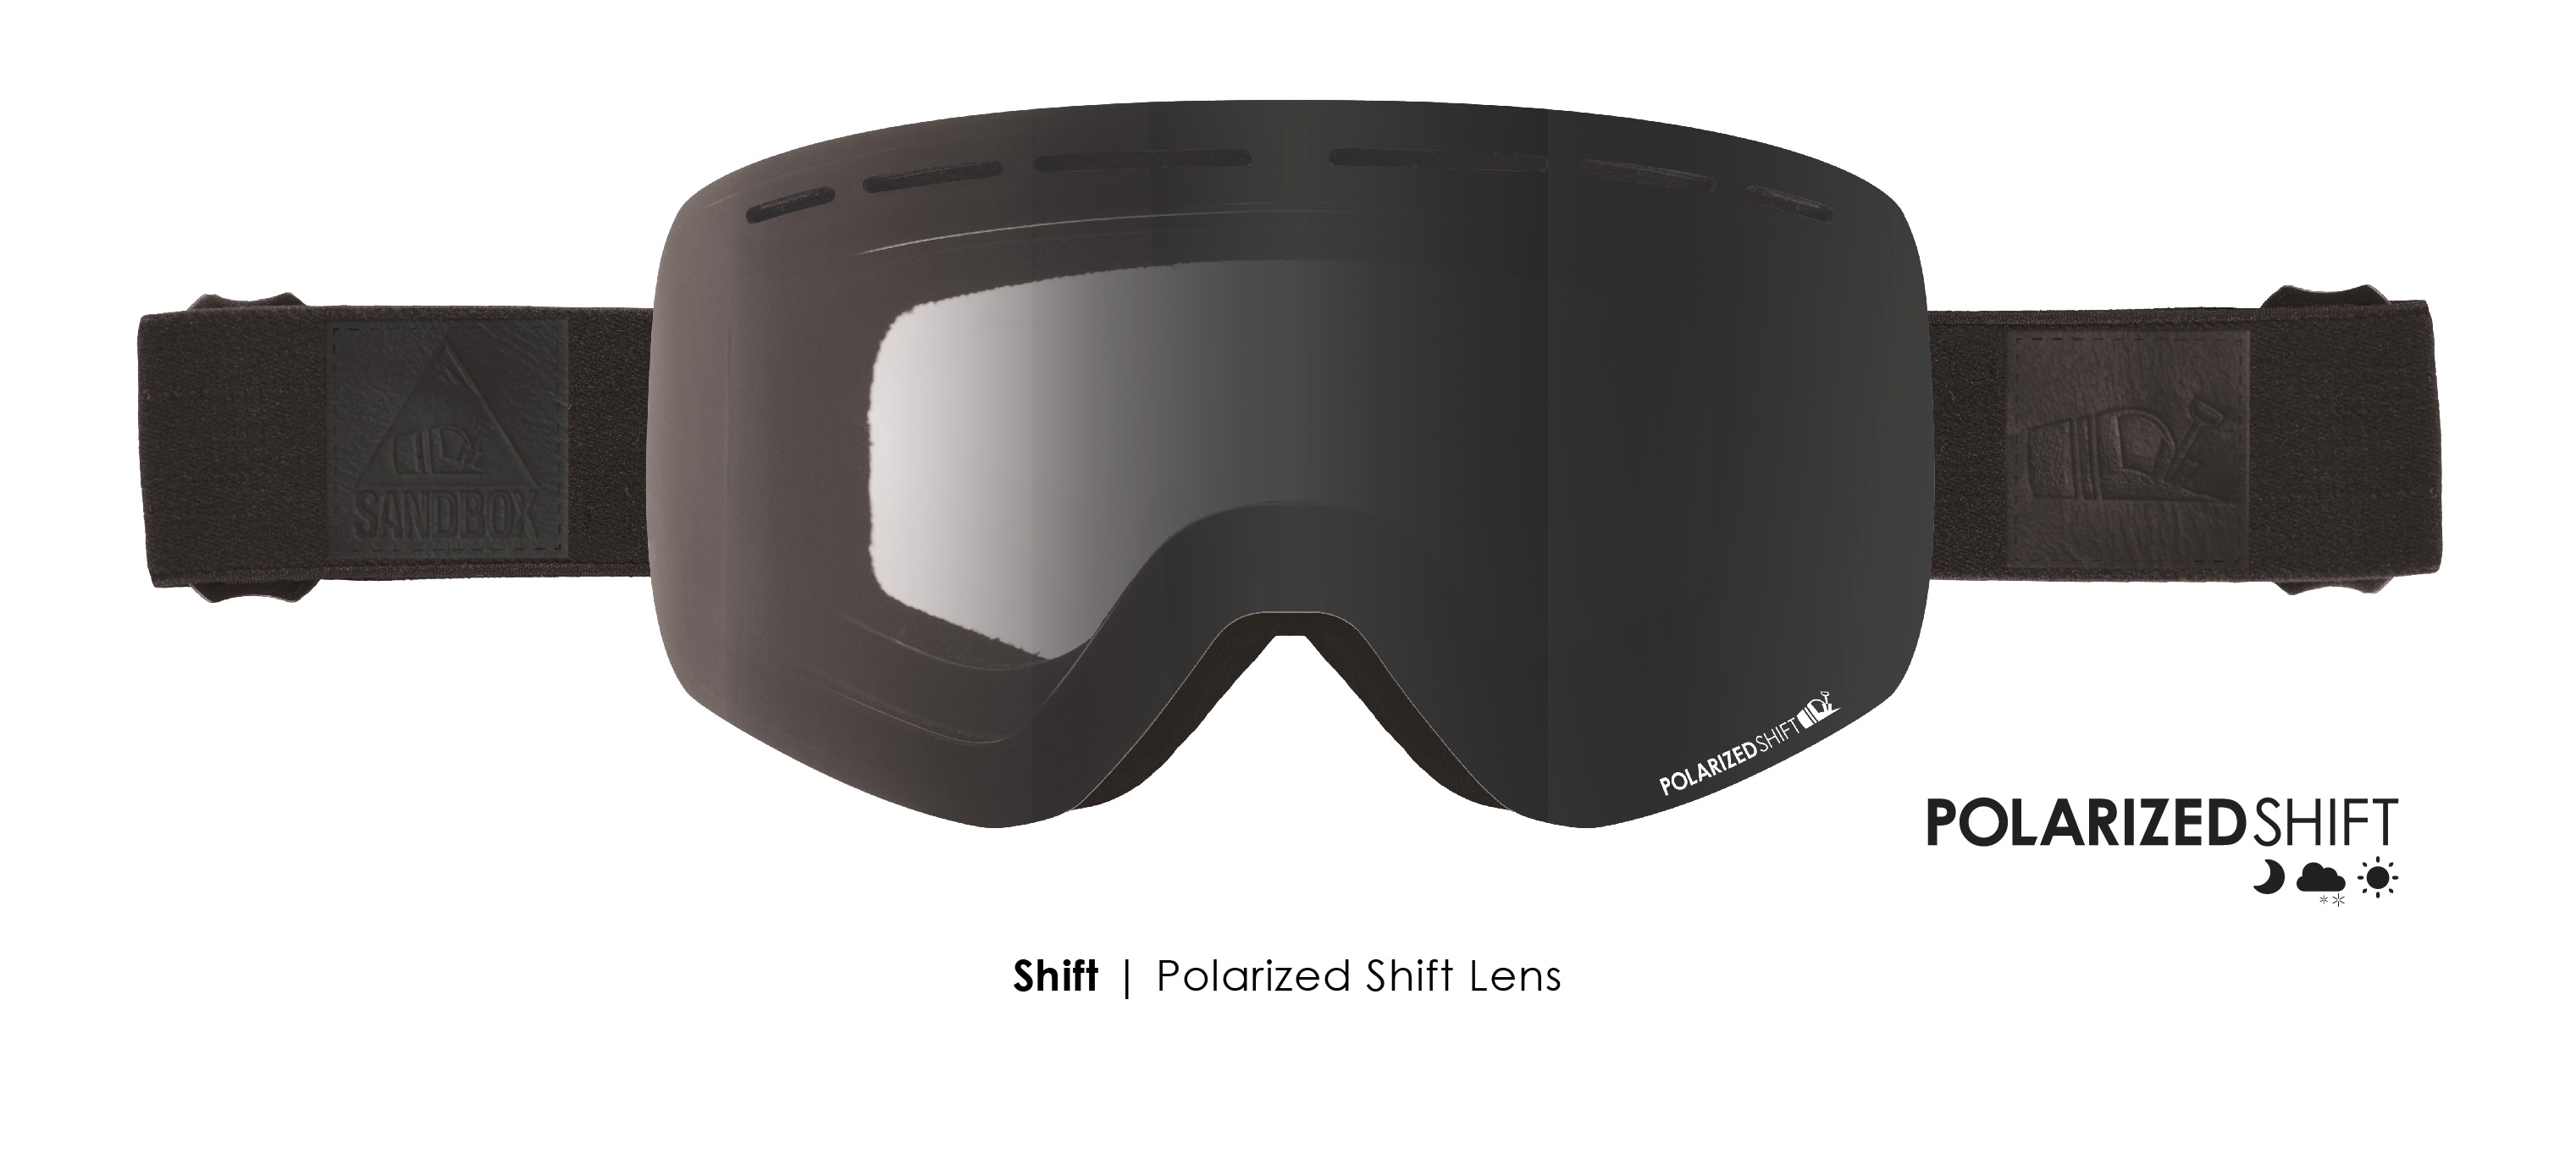 Sandbox® THE KINGPIN™ Black Snow Goggles POLARIZED PHOTOCHROMIC Shift Lens NEW 